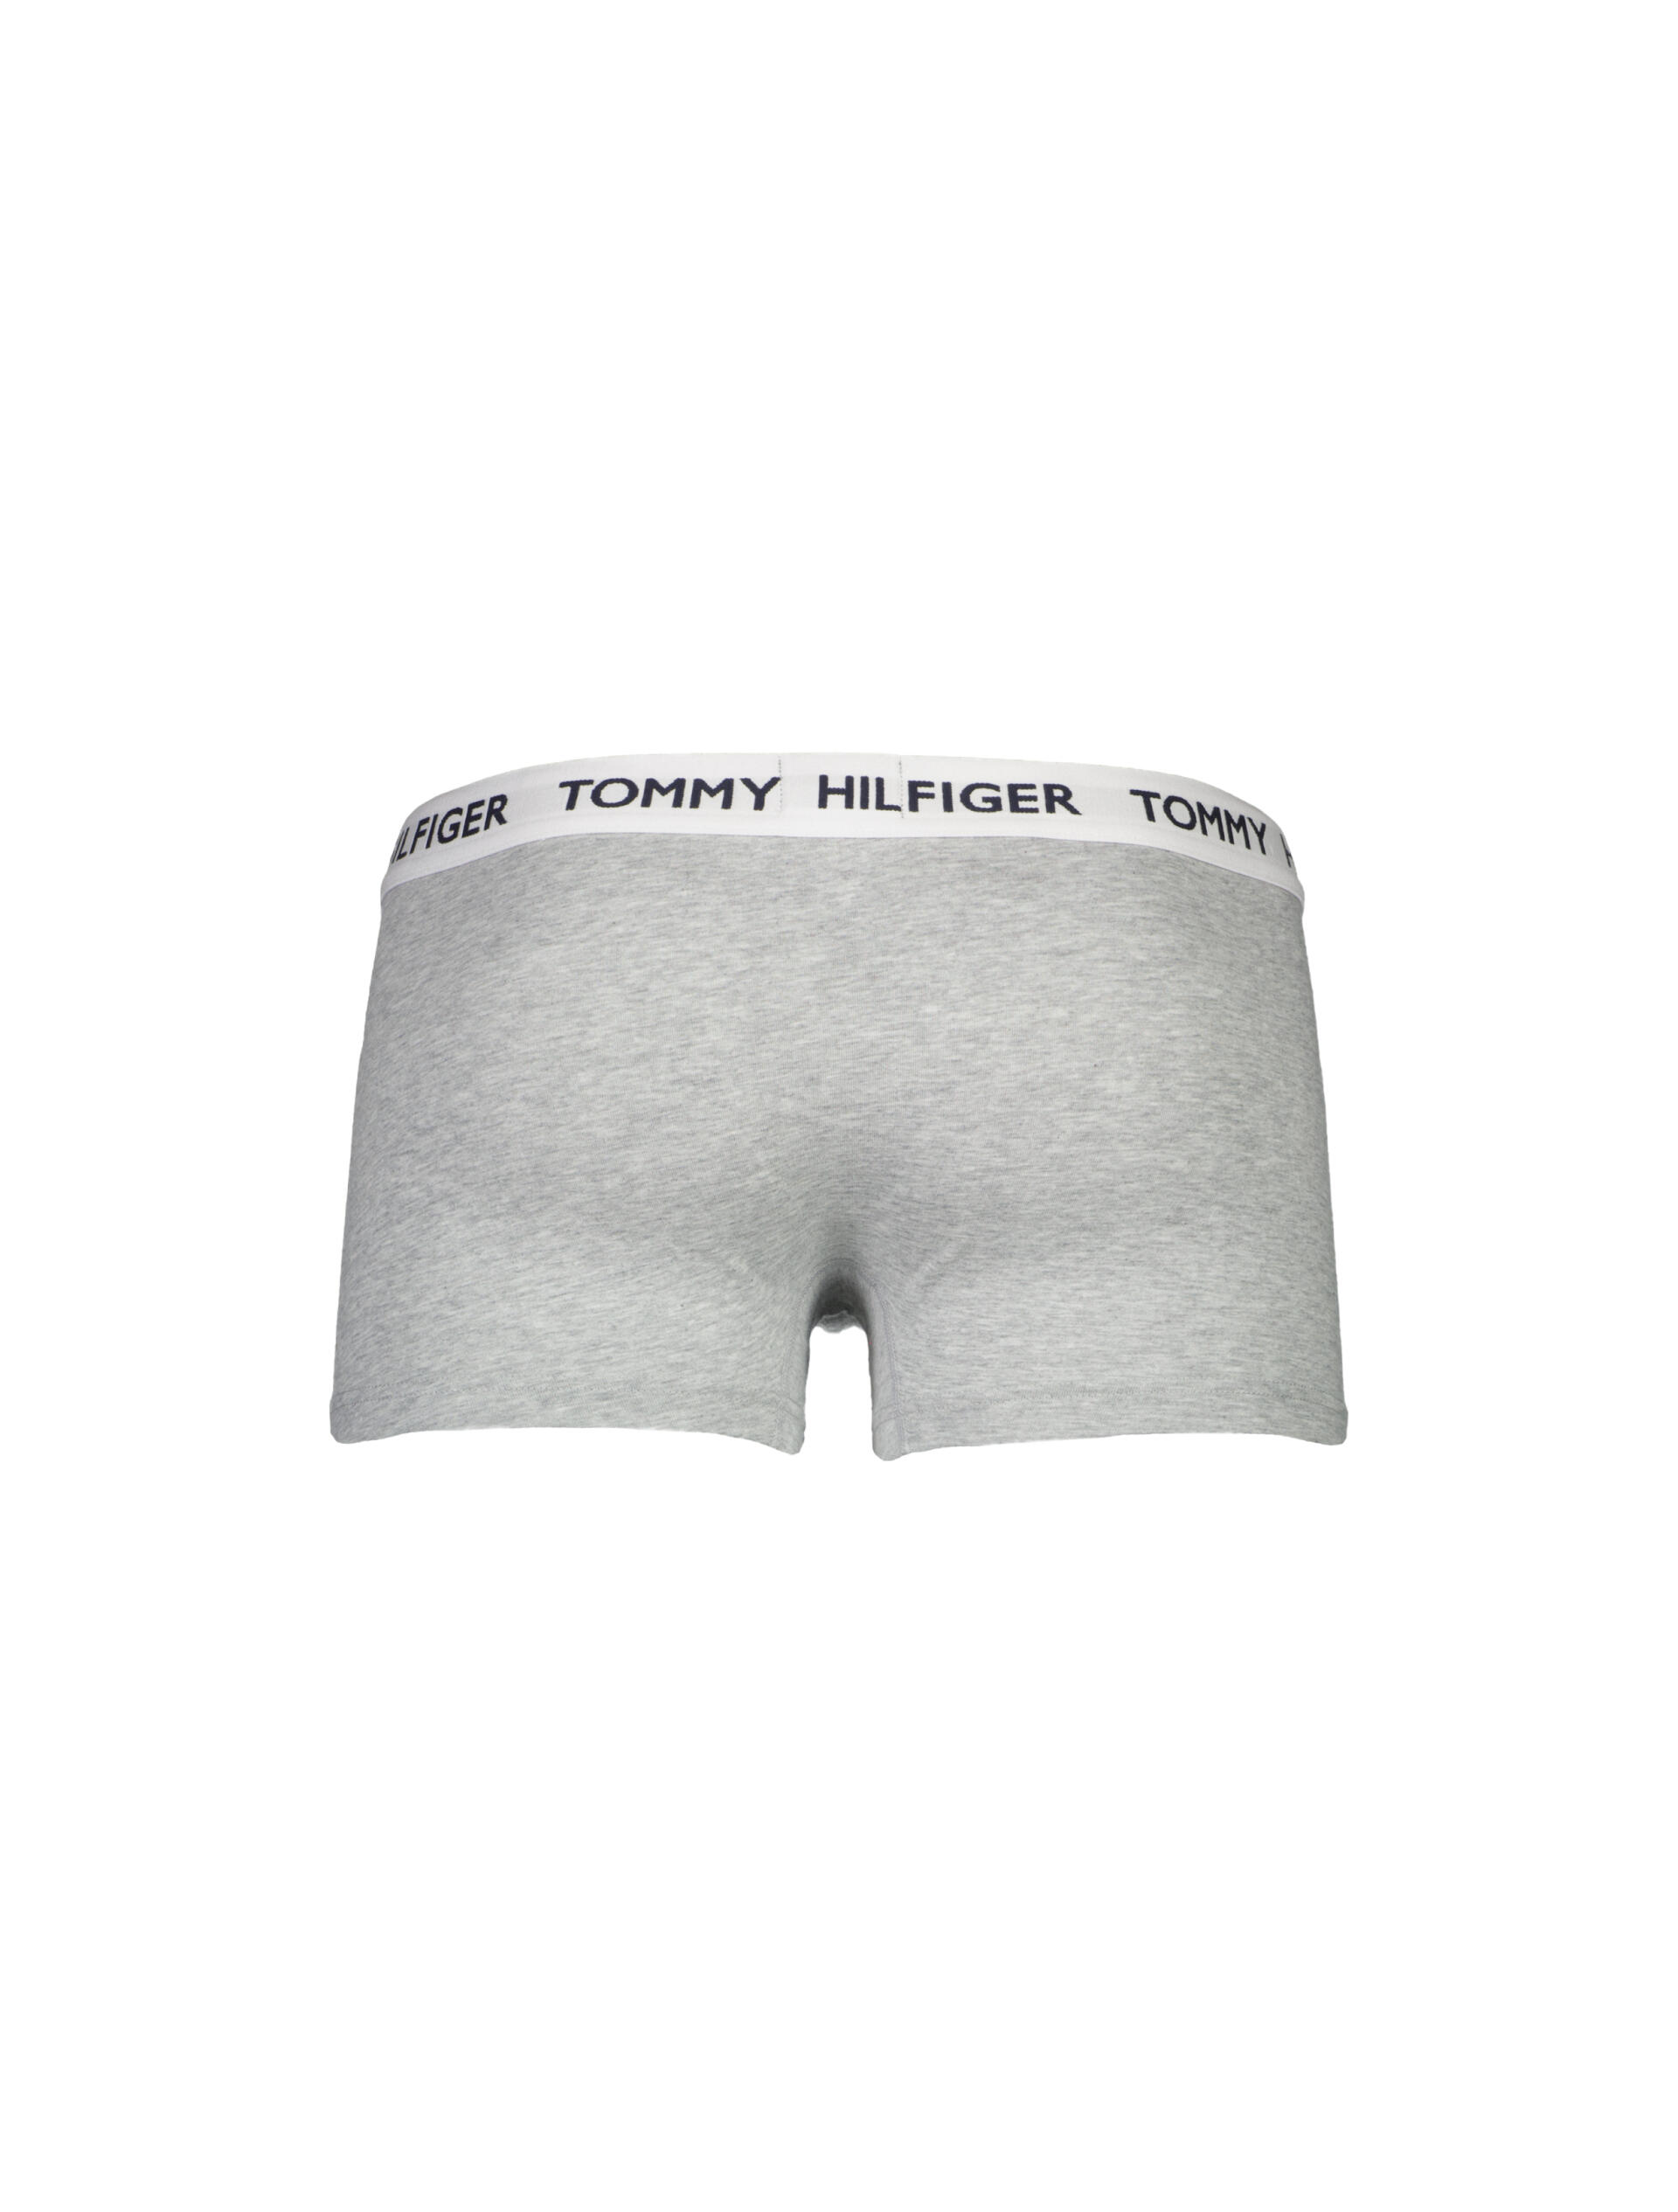 Tommy Hilfiger  90-900807